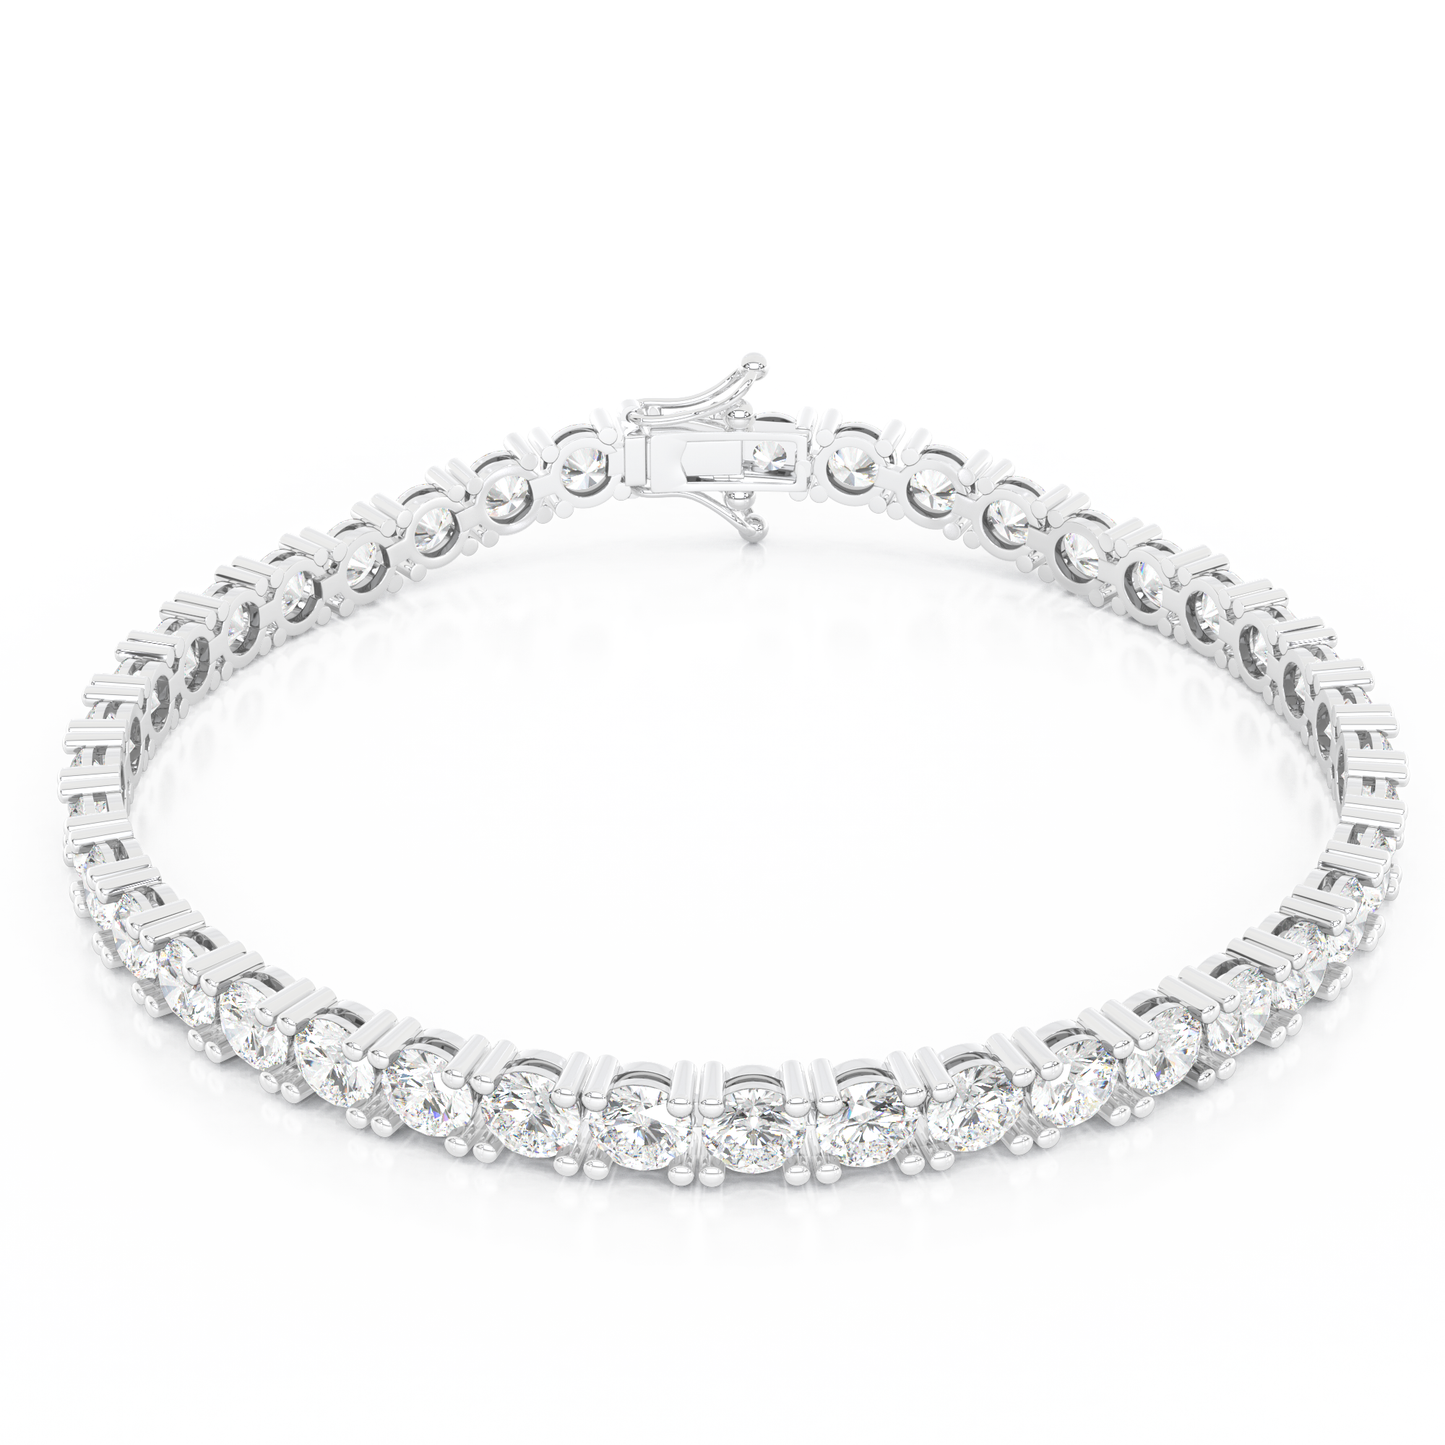 4.00cts+ 4-Prong Lab Grown Diamond Bracelet <Affordable>